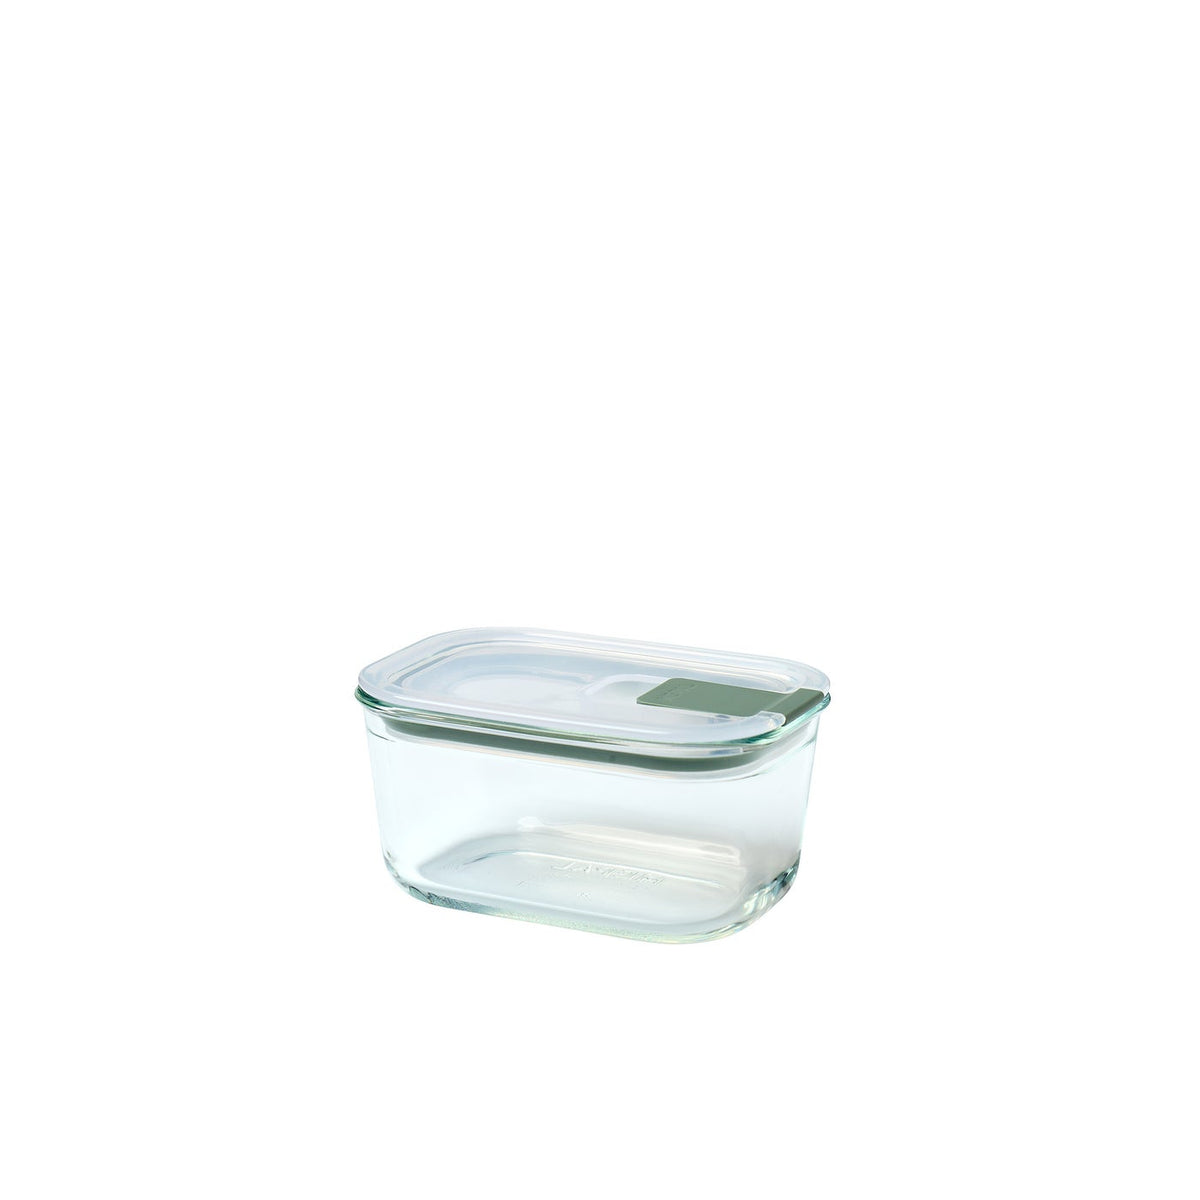 EASYCLIP Rectangular Glass Box by Mepal